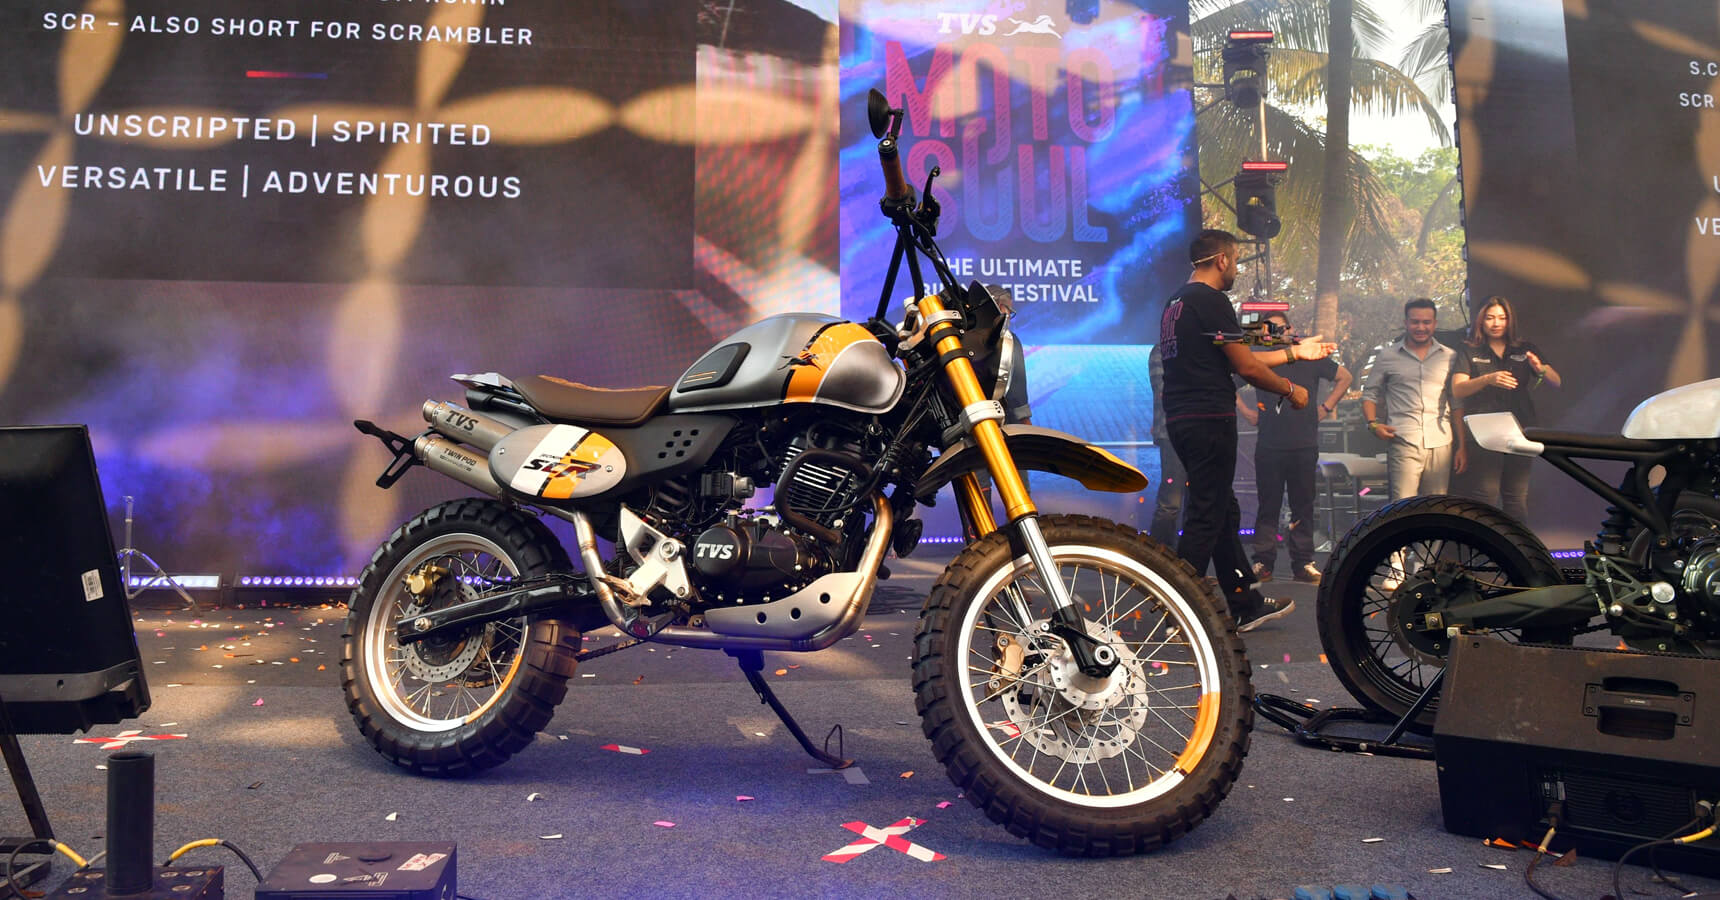 TVS showcases custom built Ronin Motorcycles